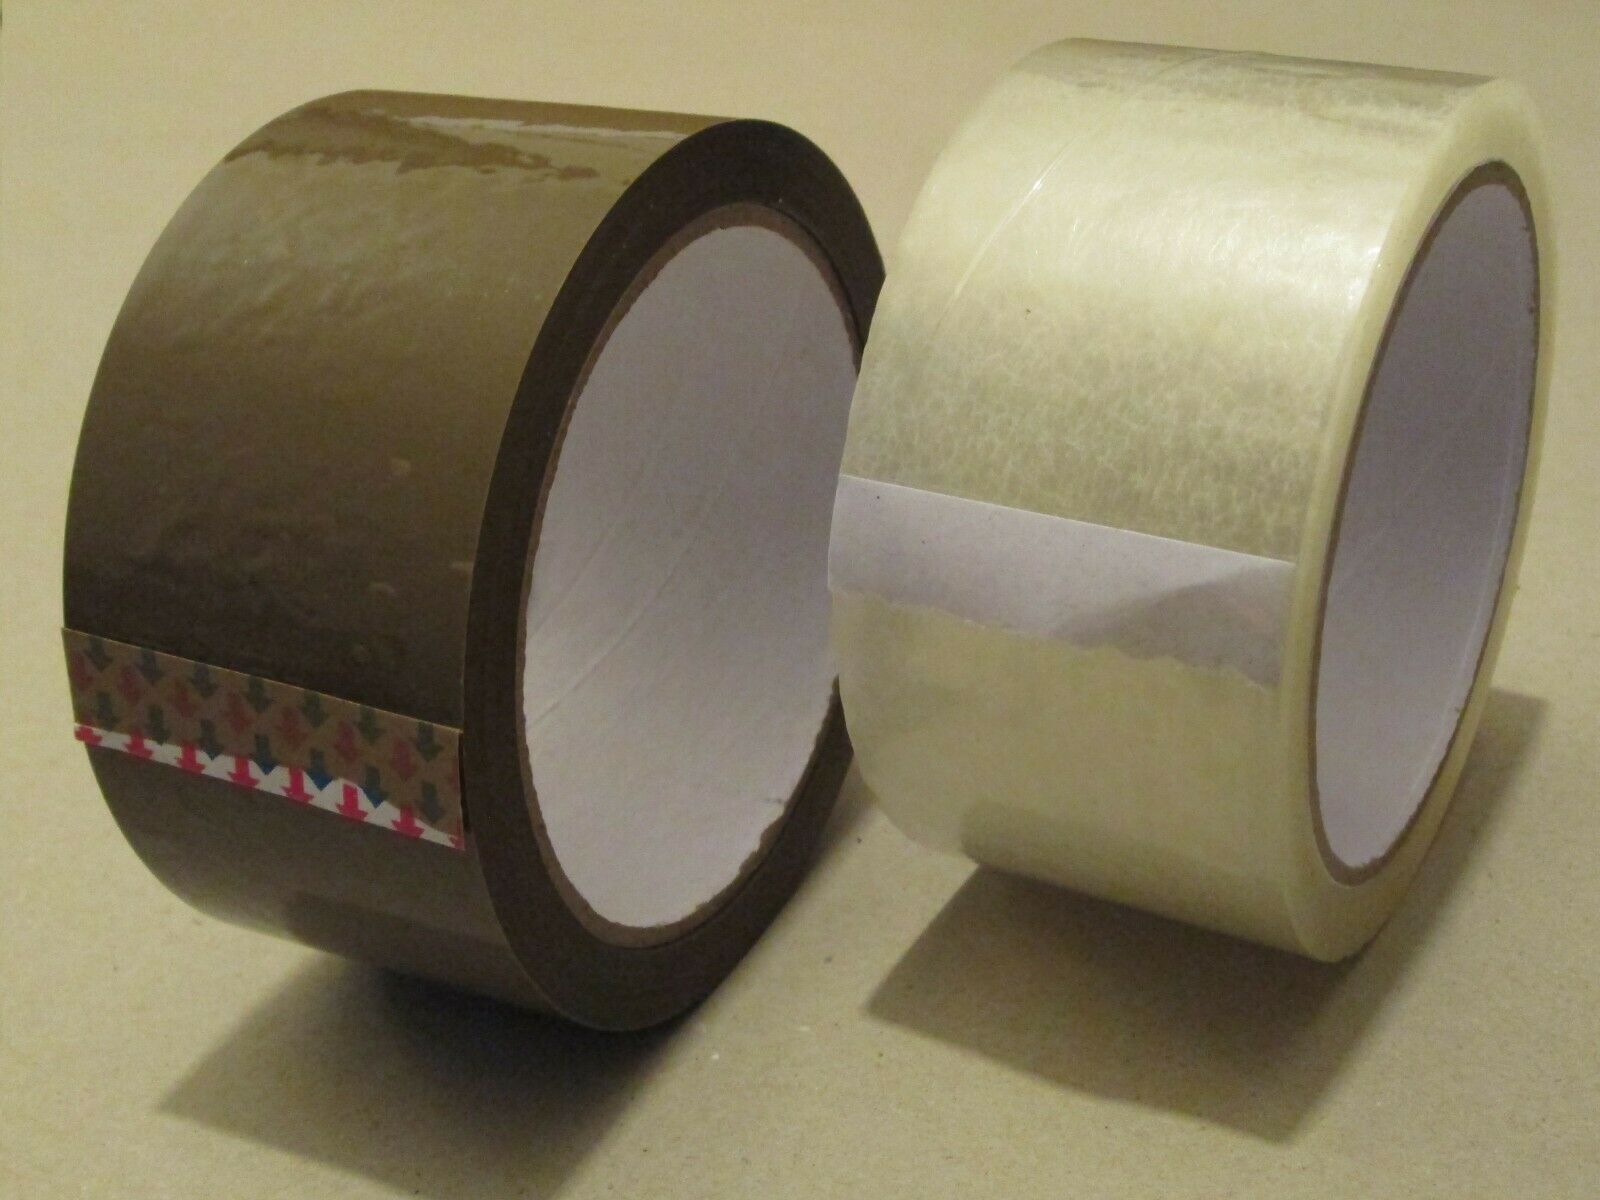 6 Kleberollen Packband Paketband Paketklebeband unbedruckt weiss 48 mm x 66 lfm 